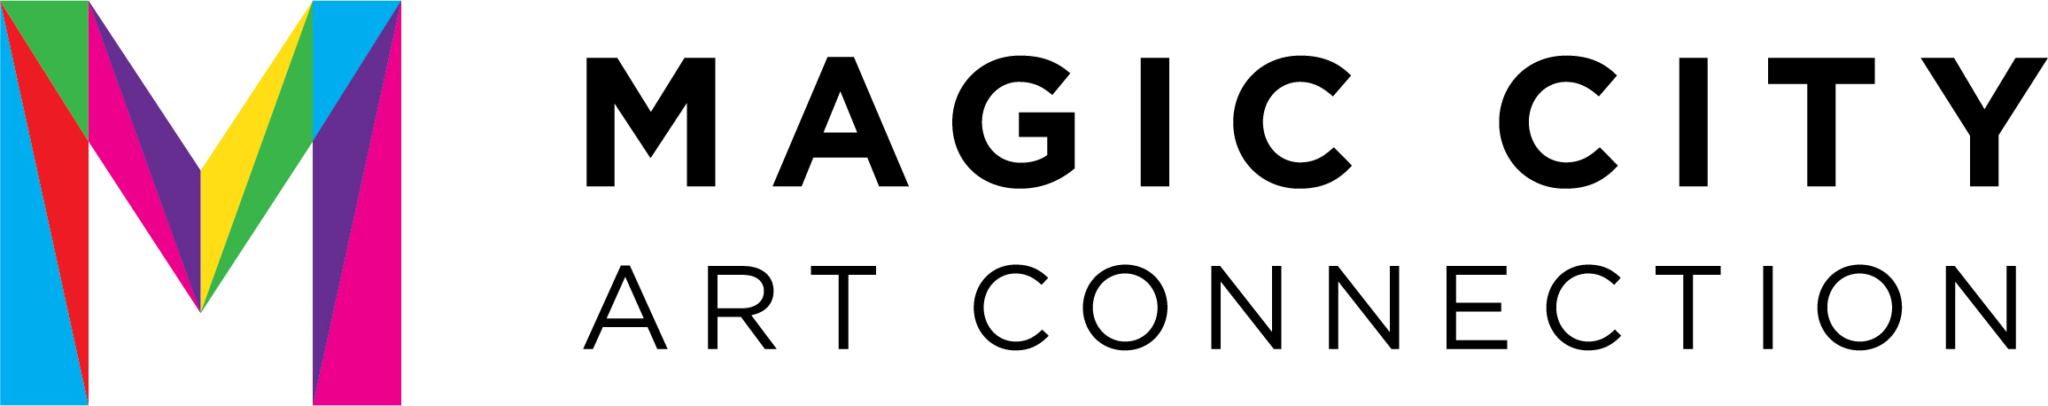 2021 Magic City Art Connection new logo